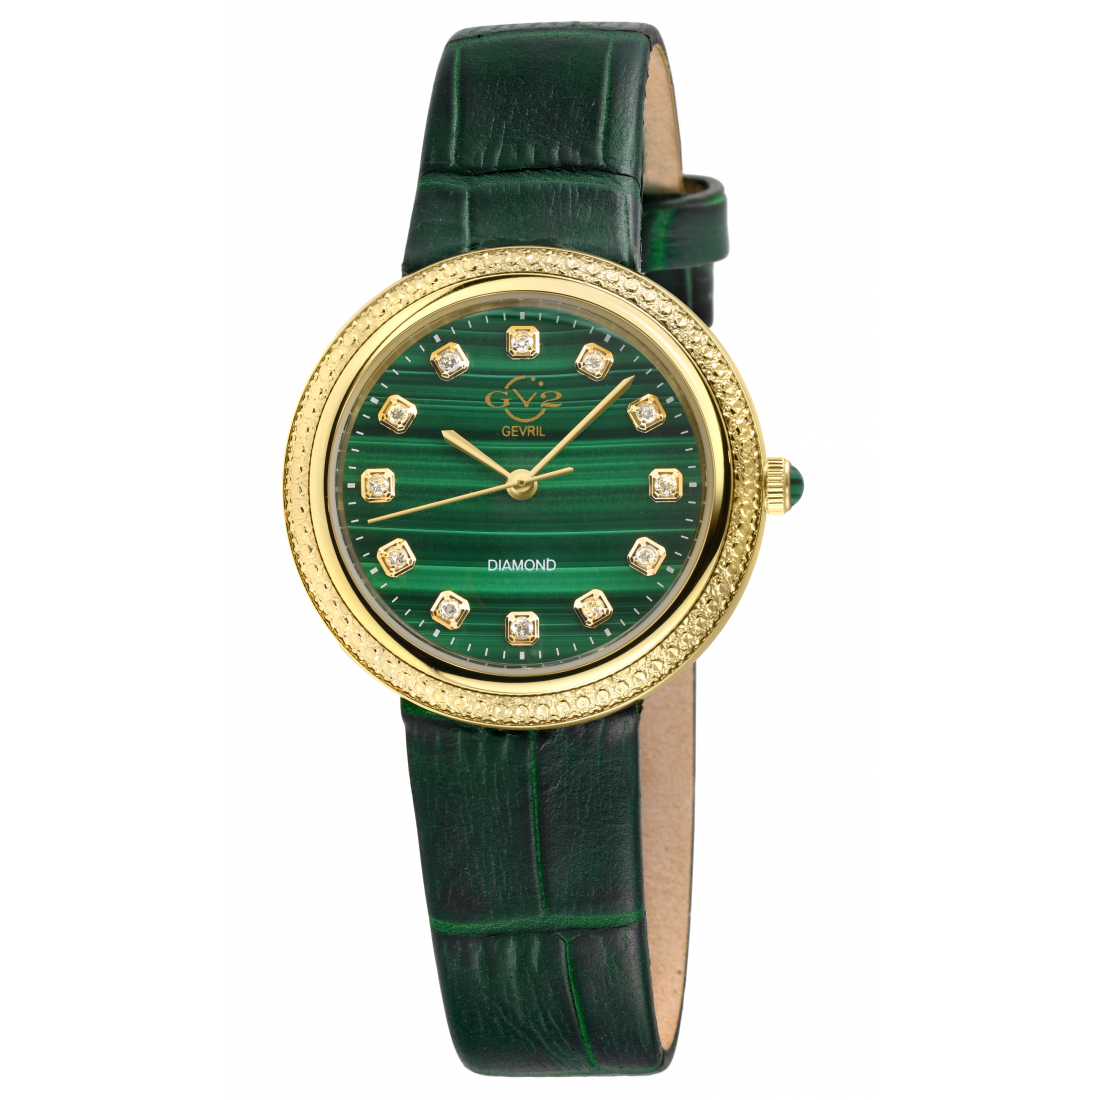 GV2 Arezzo Women's Diamond Watch,IPYG Case, Malchaite Dial, Genuine Italian Handmade Green Leather Strap